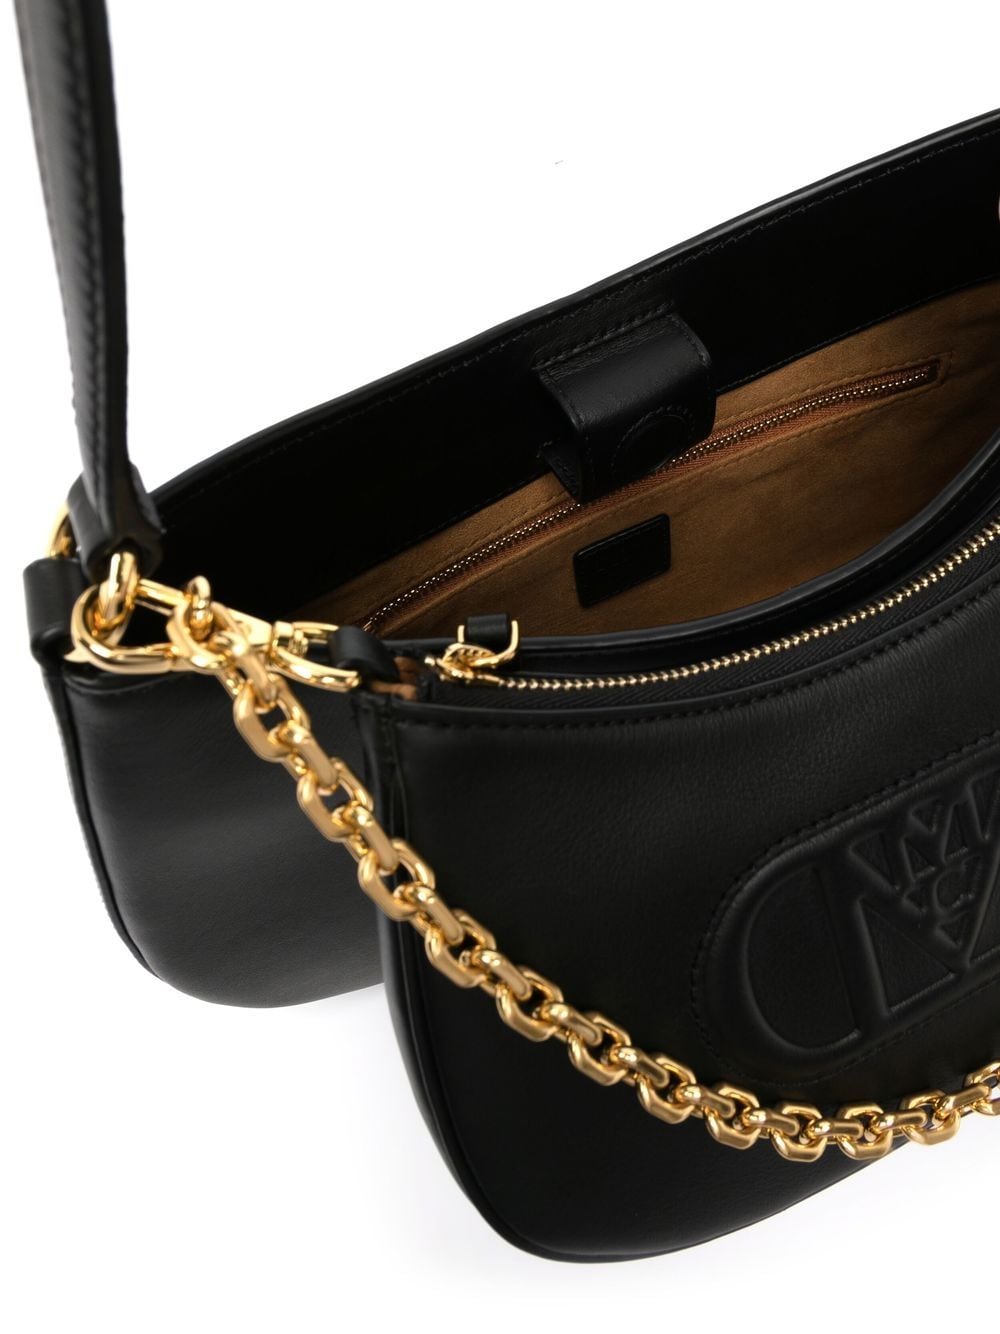 Mcm Mode Travia Small Leather Shoulder Bag - Bosphorus/Gold